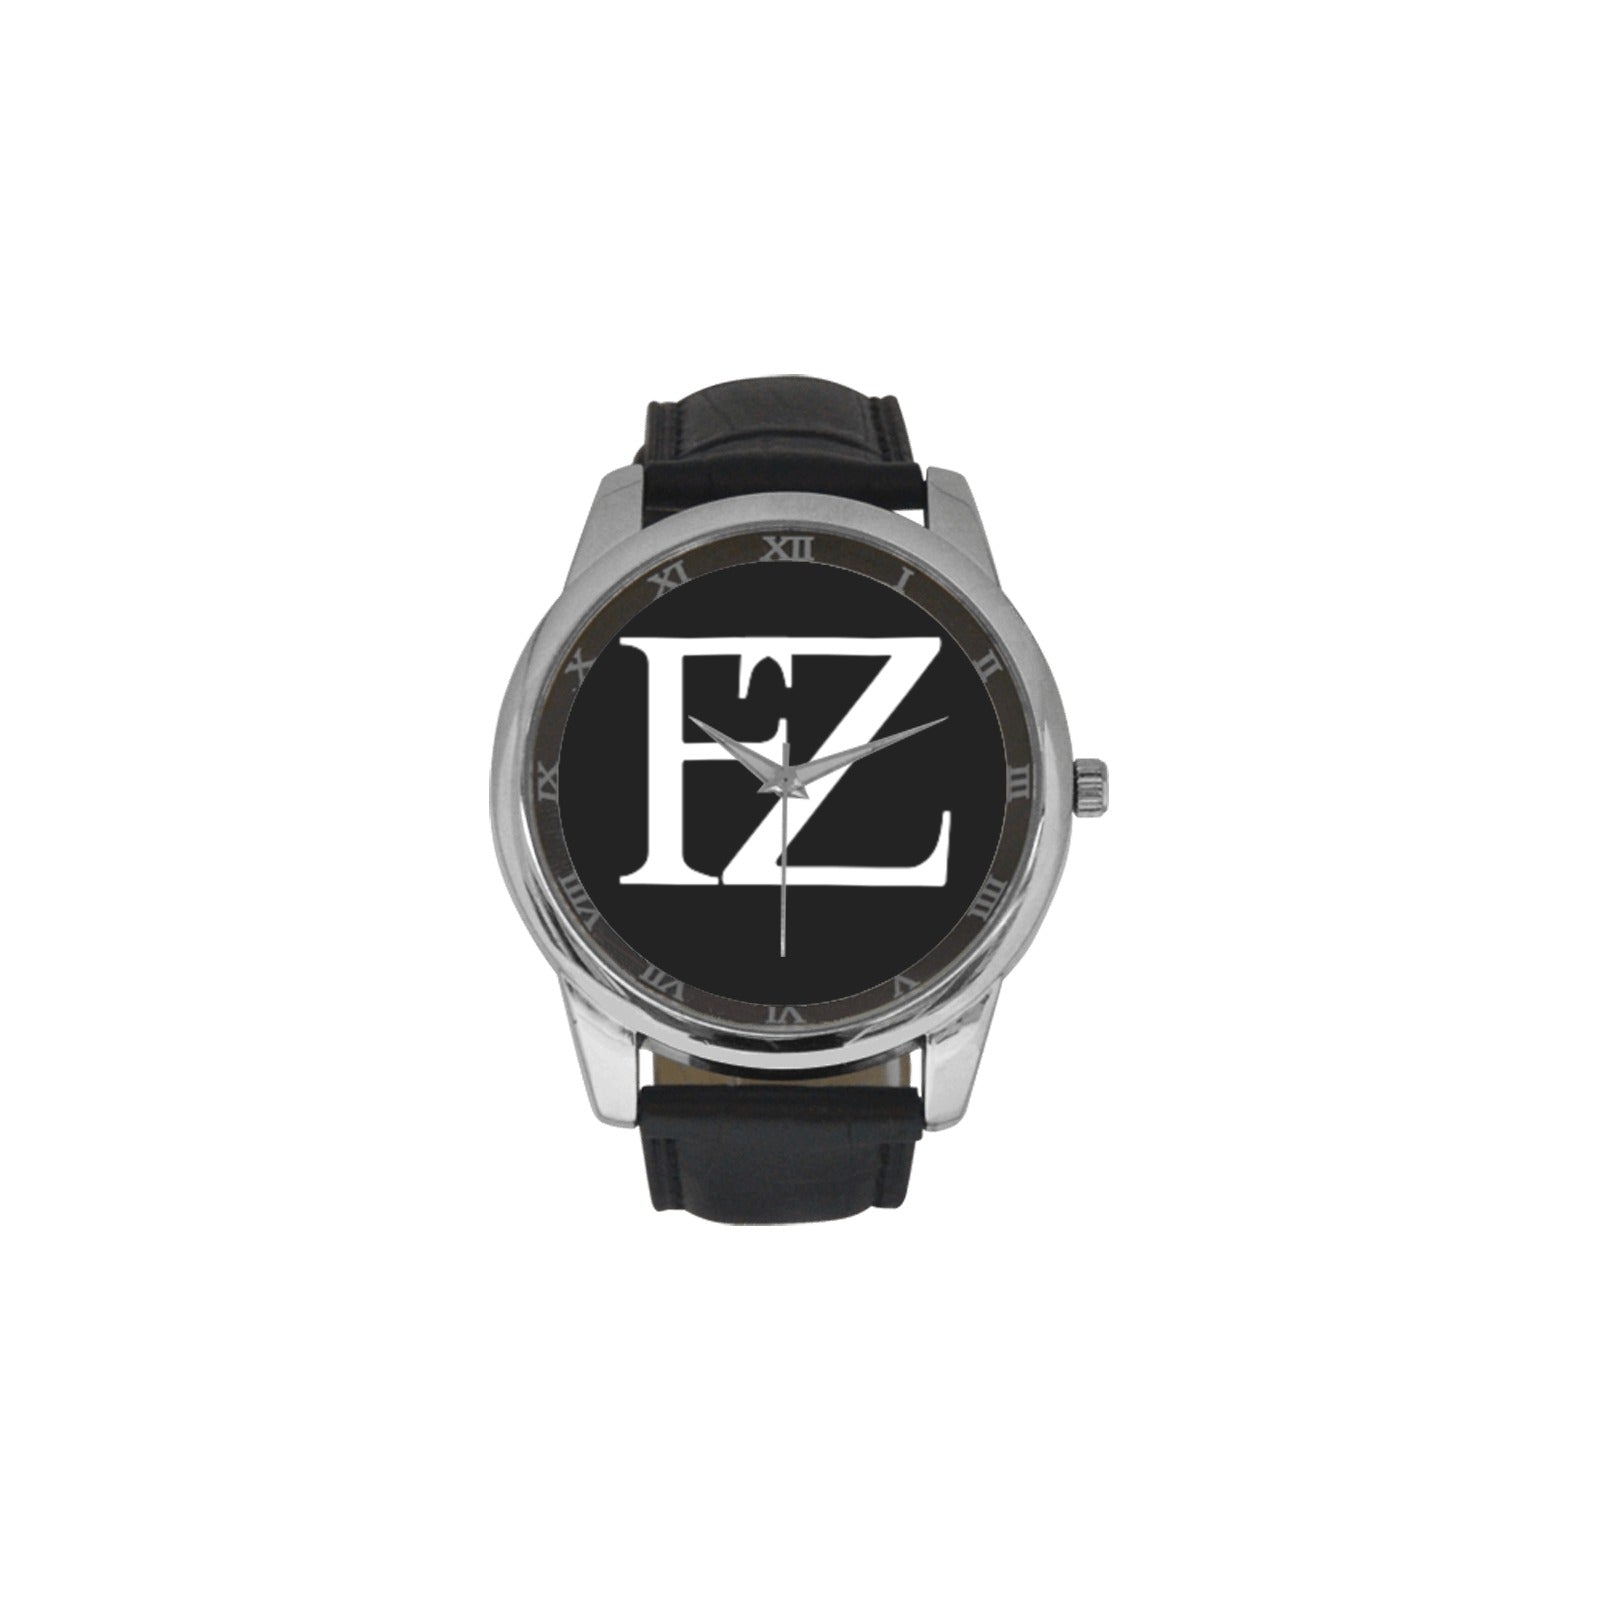 fz original watch men's leather strap large dial watch (model 213)